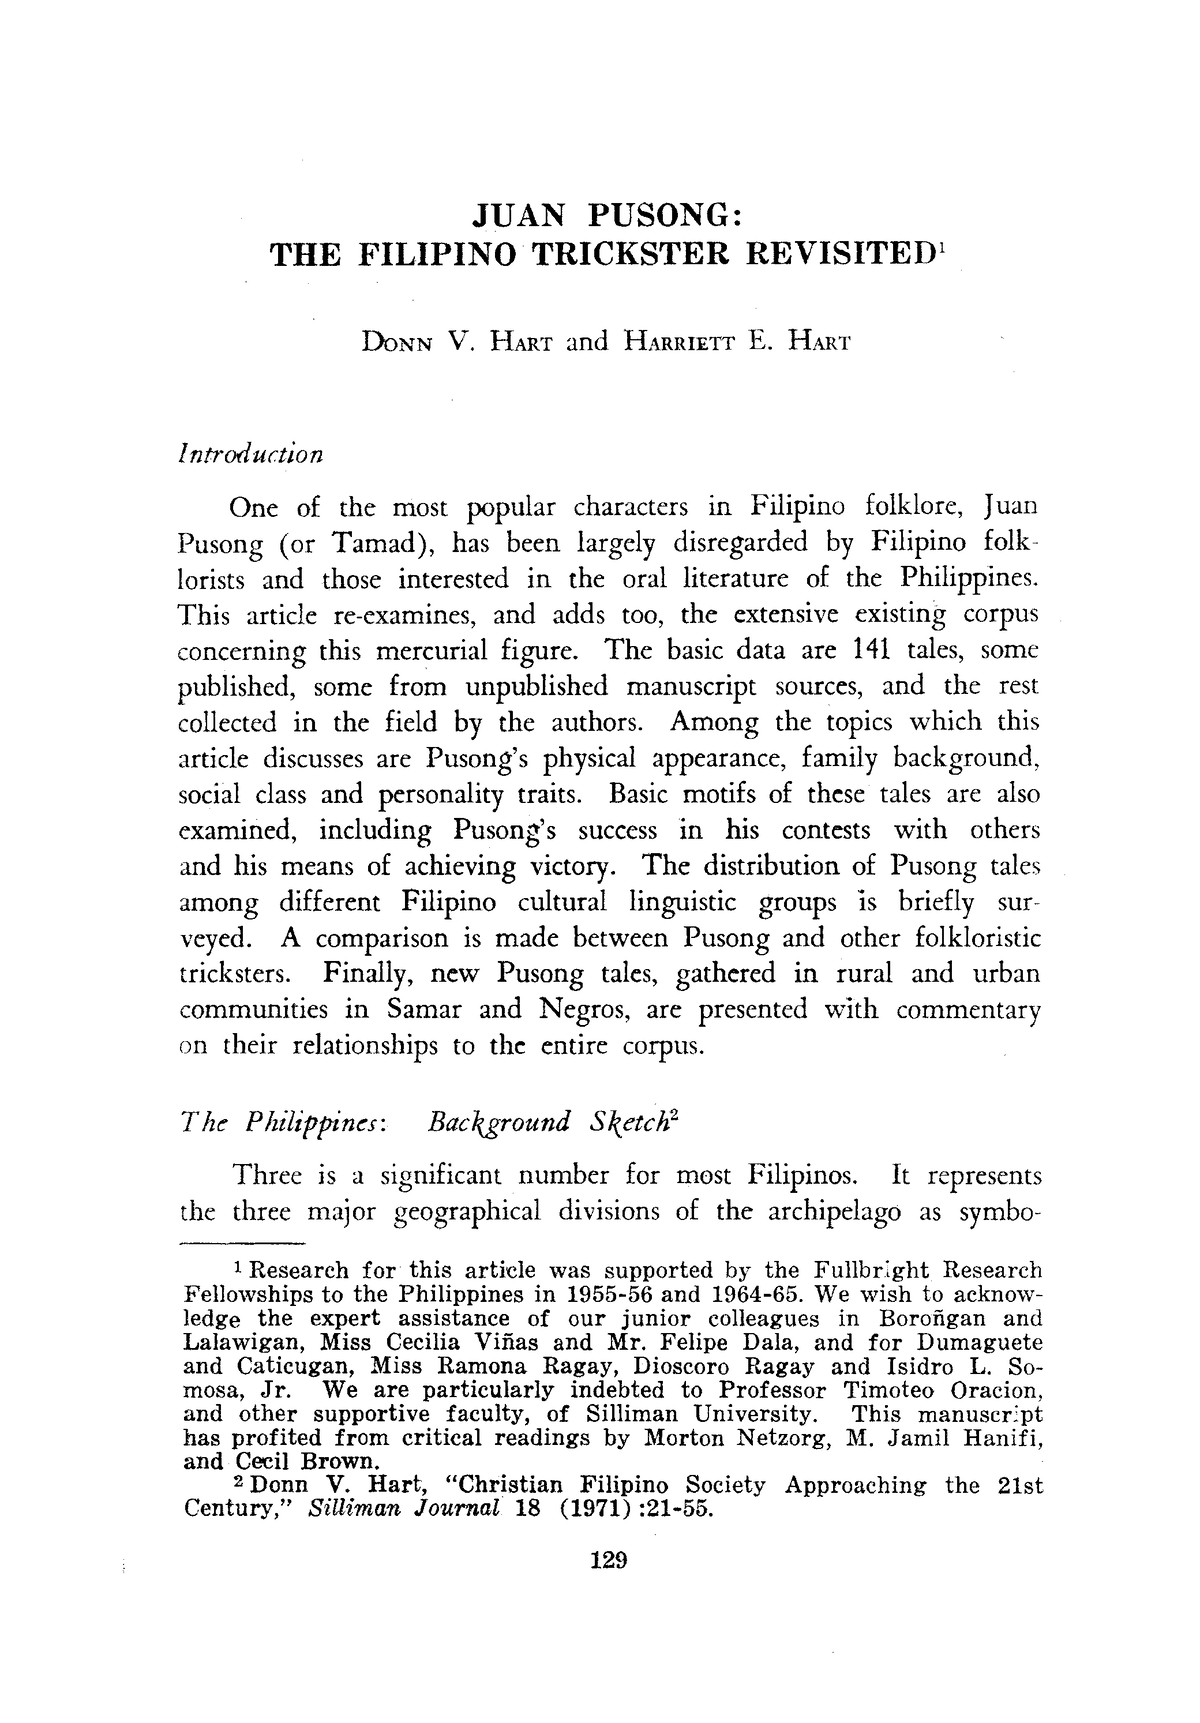 Don hard and harriet hart-juan pusong filipino trickster revisited ...